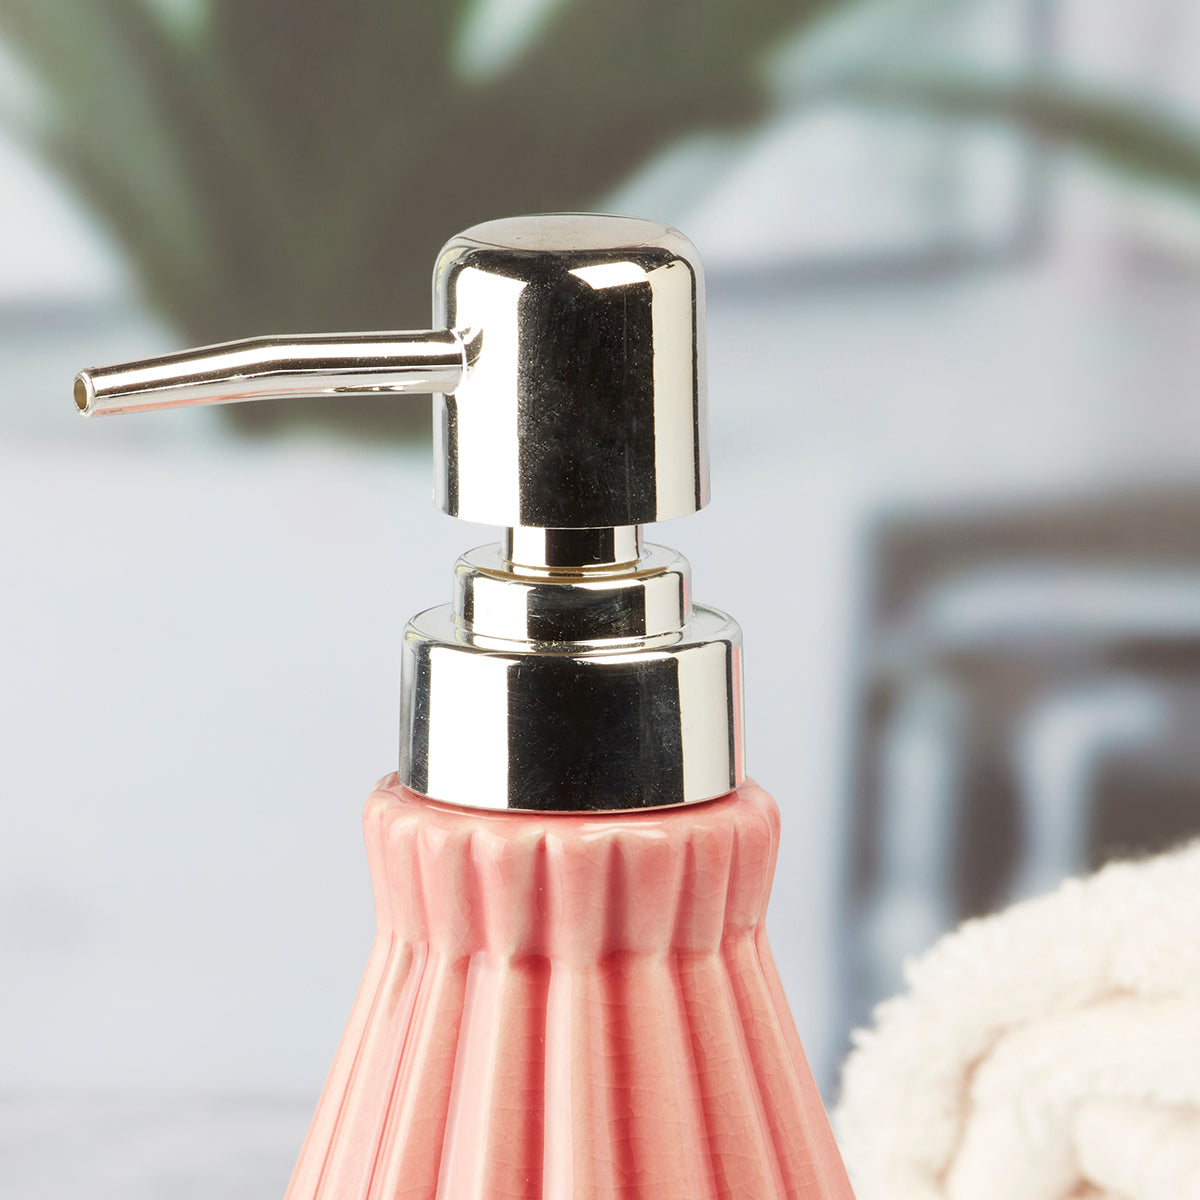 Ceramic Soap Dispenser handwash Pump for Bathroom, Set of 1, Peach (7627)